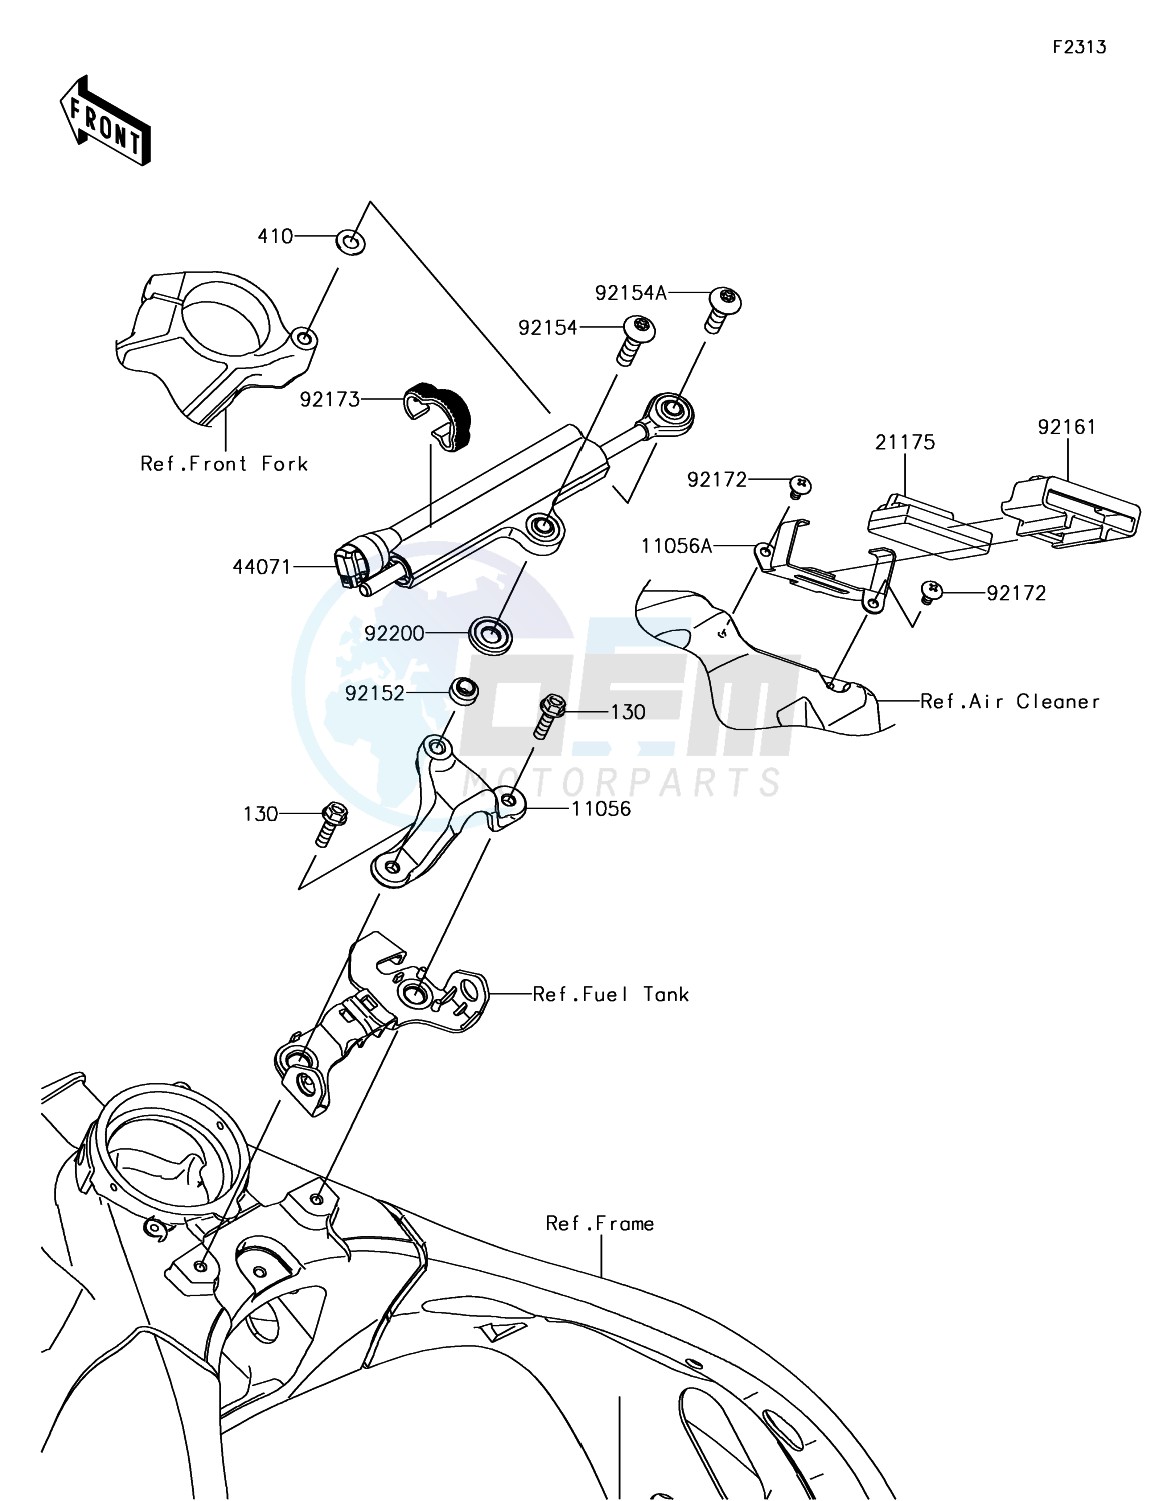 Steering Damper blueprint